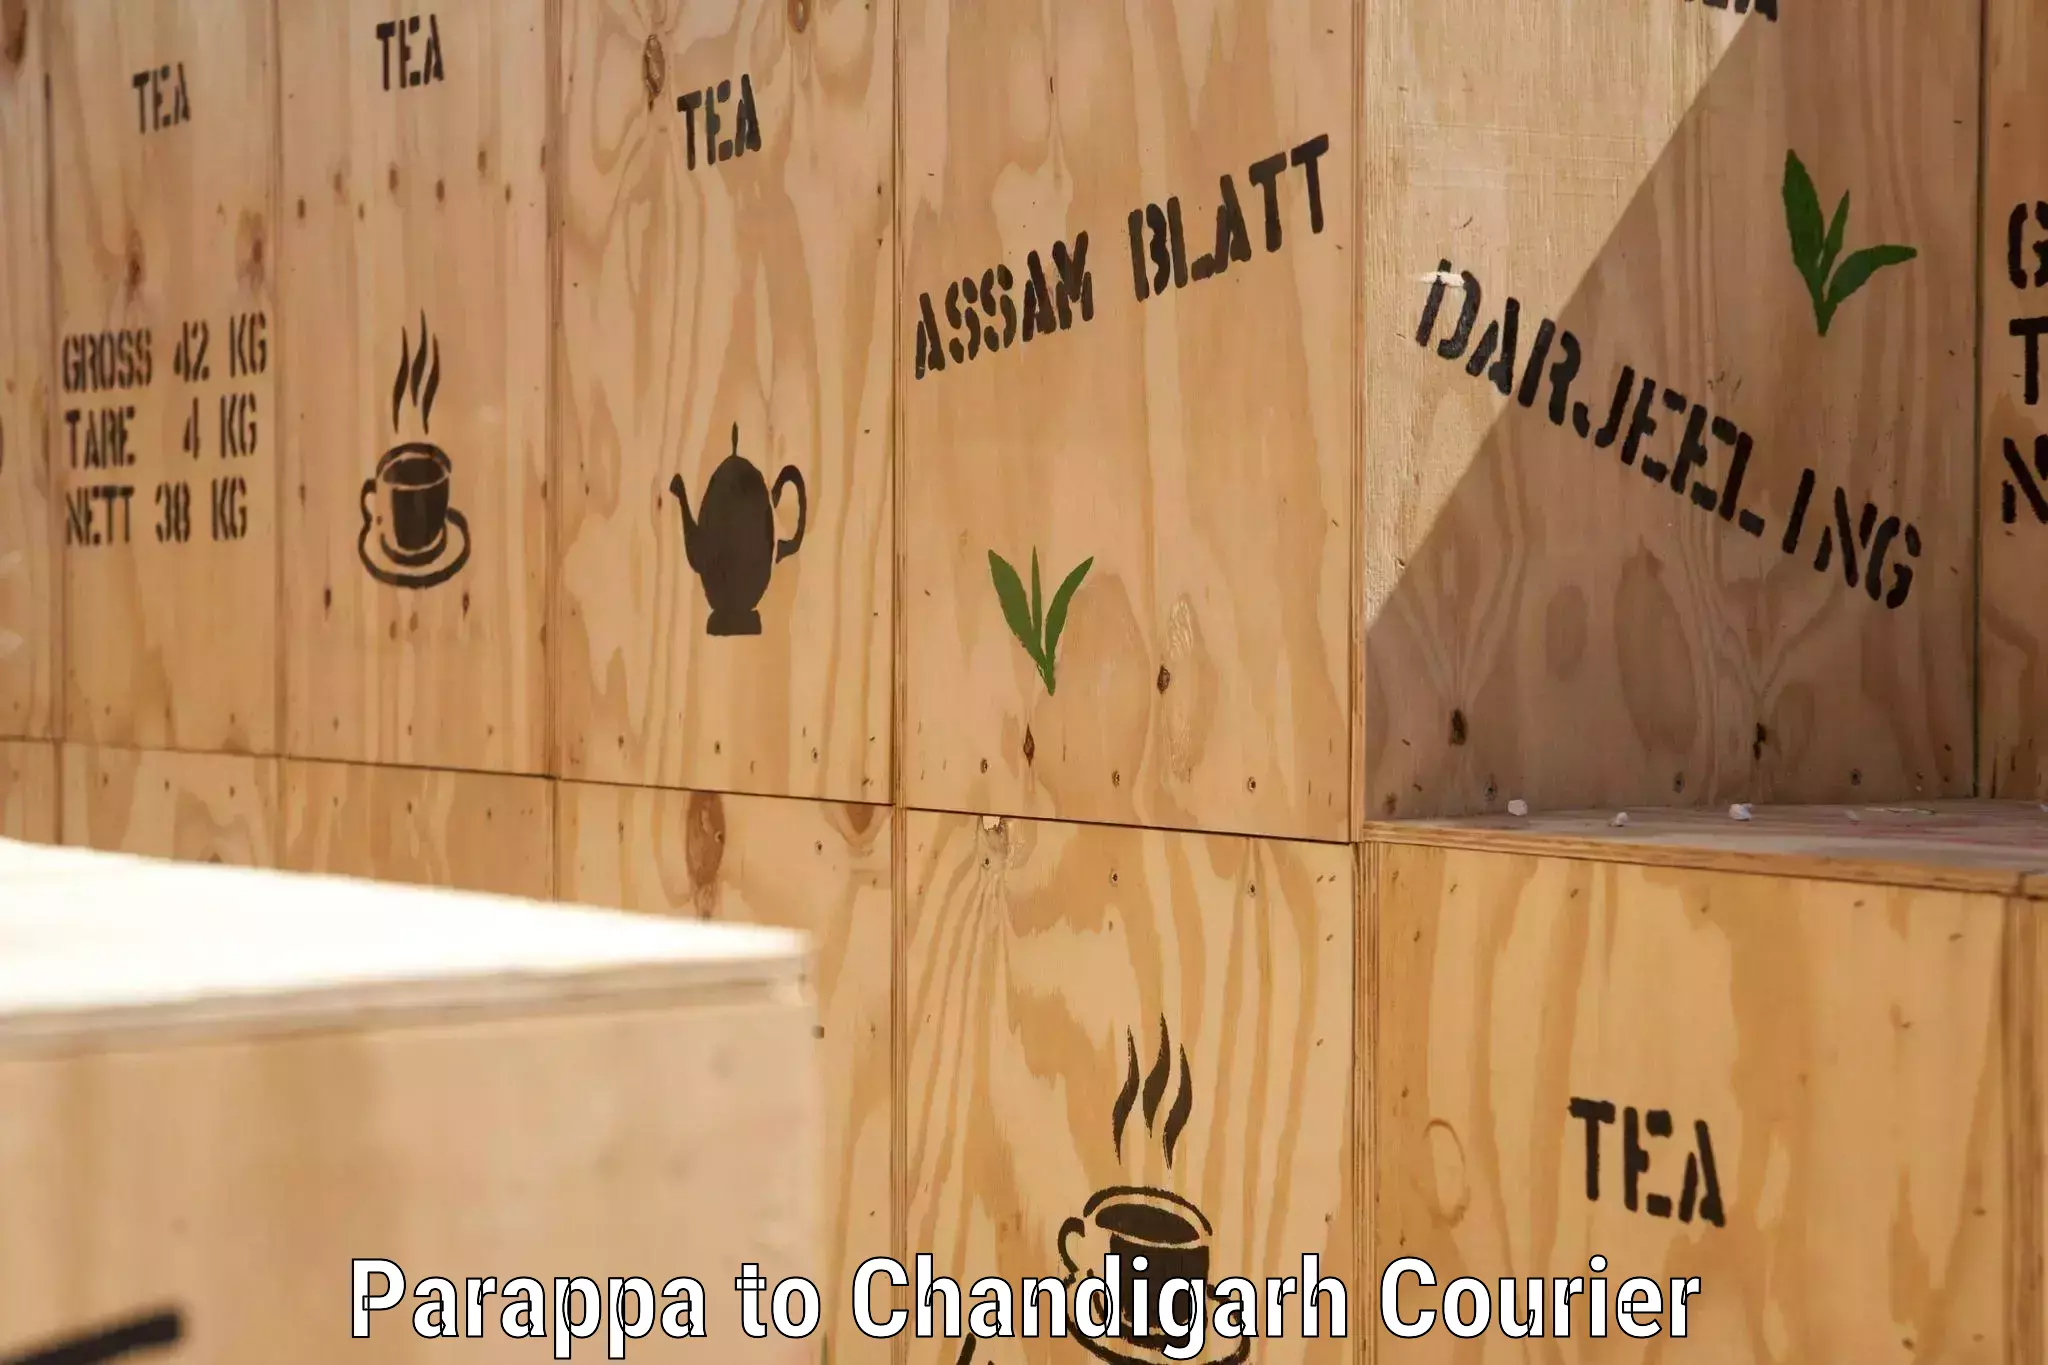 International logistics Parappa to Chandigarh